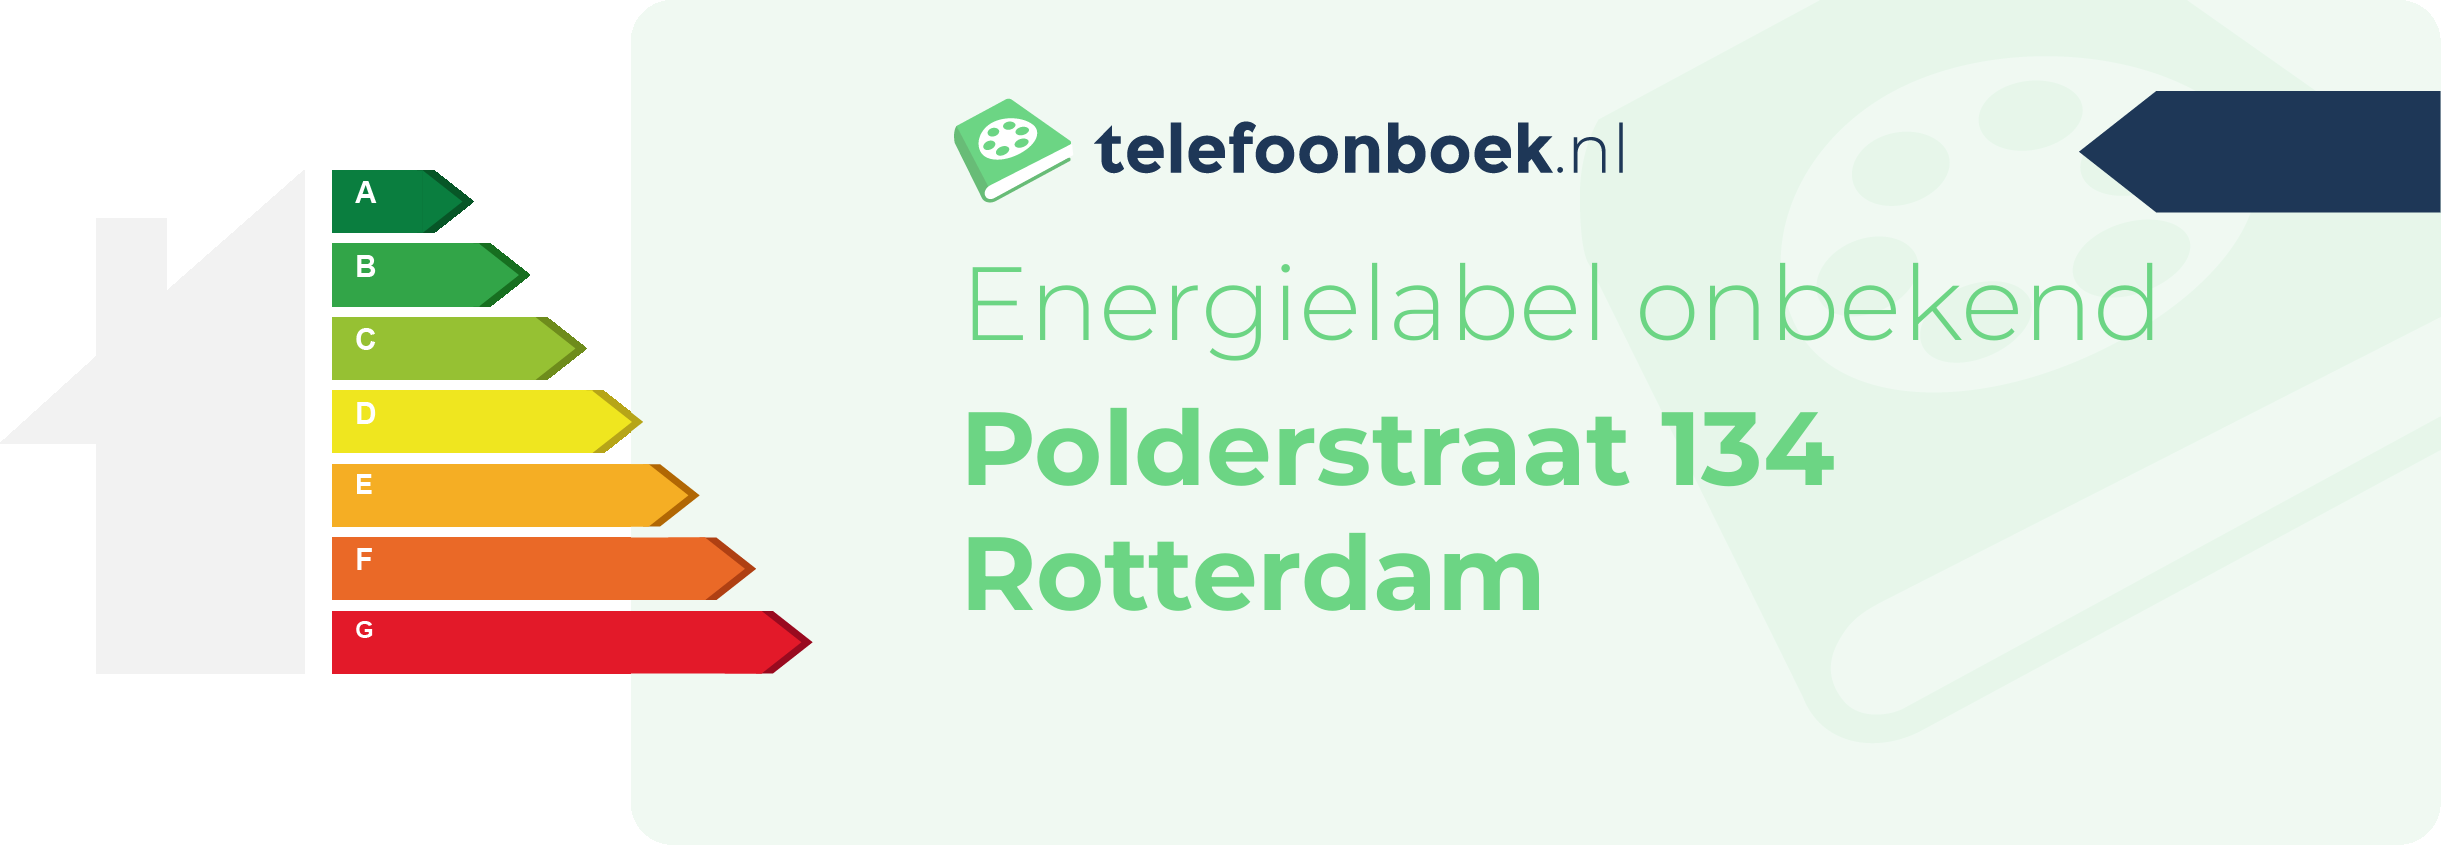 Energielabel Polderstraat 134 Rotterdam